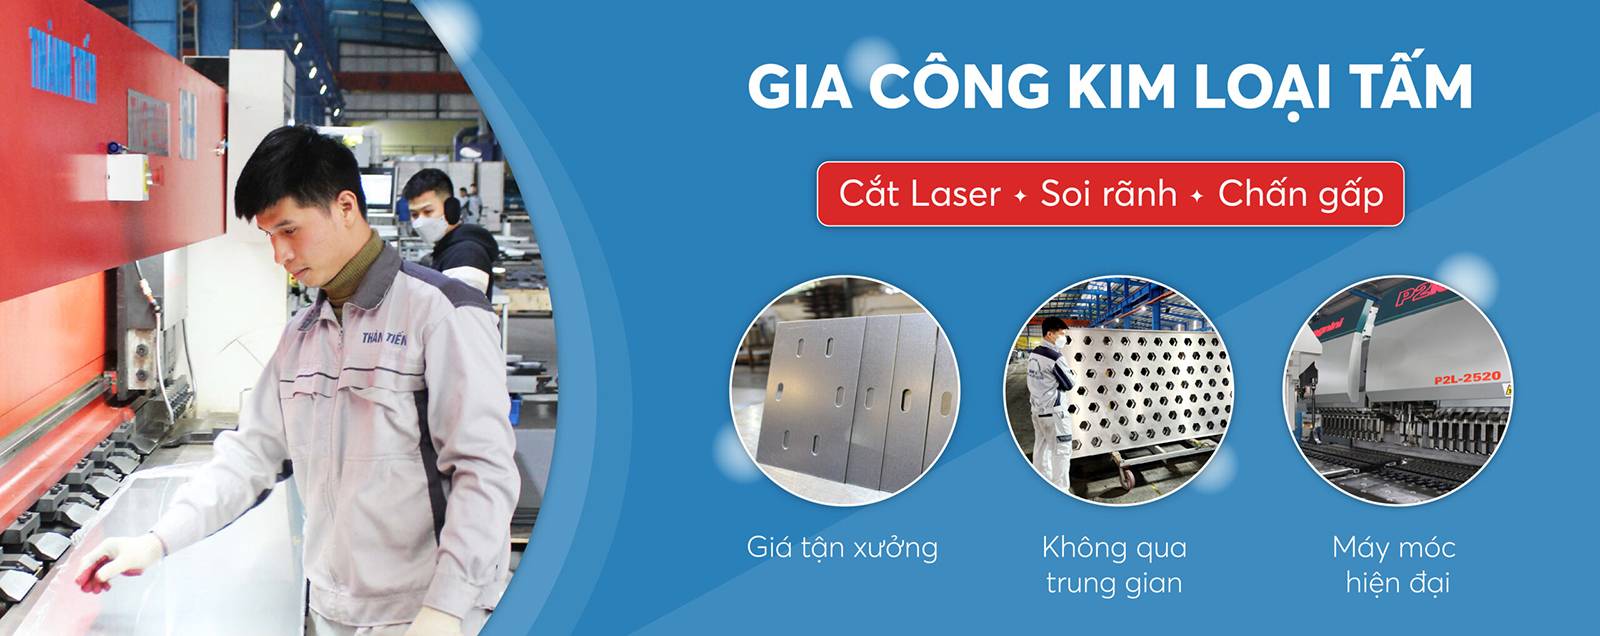 Dịch vụ cắt laser kim loại